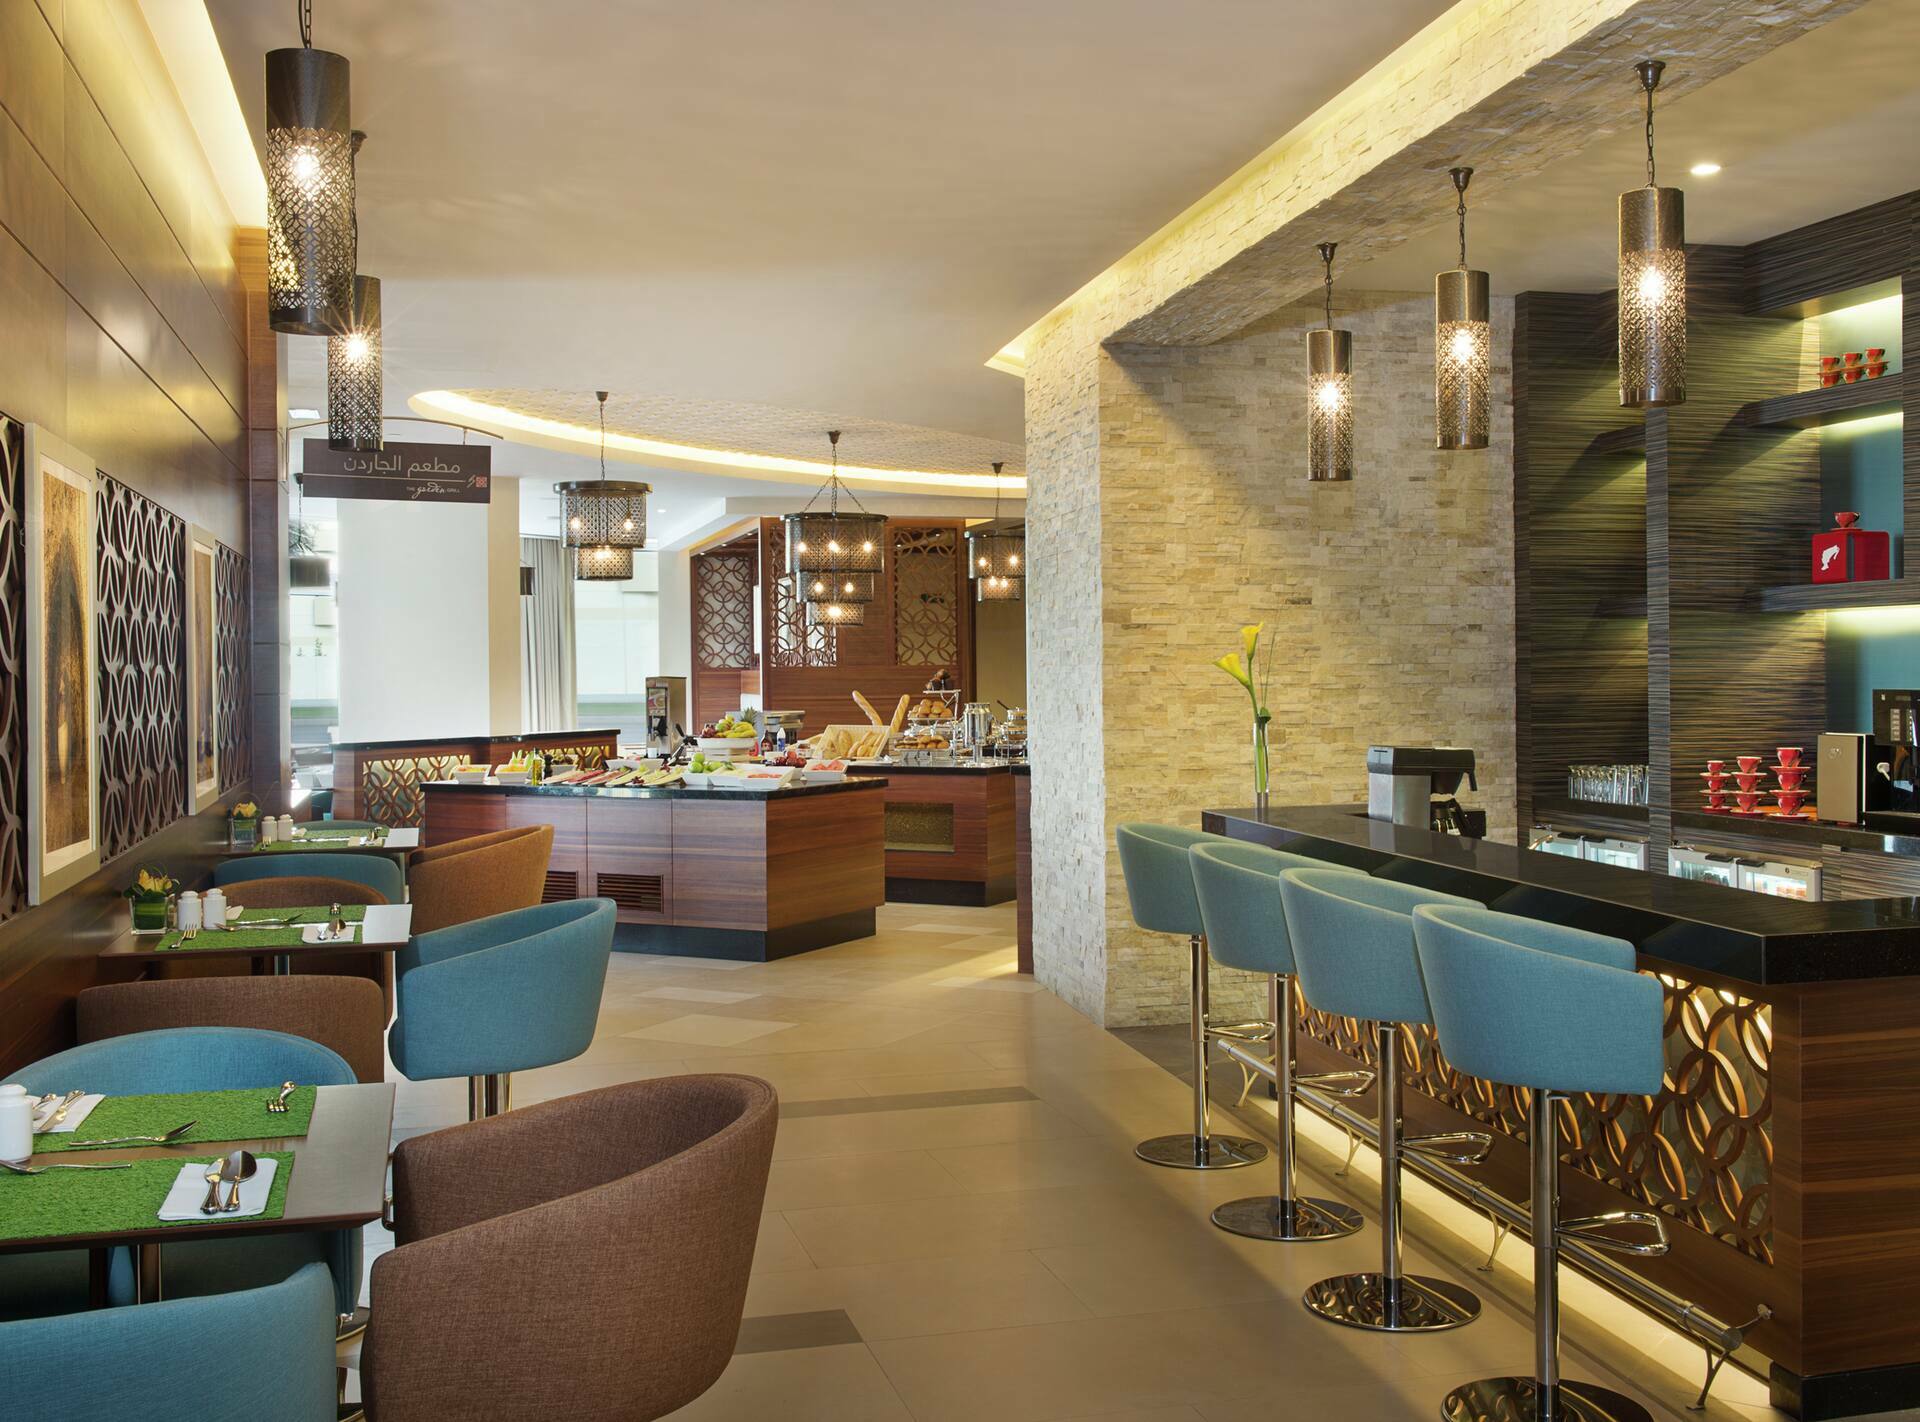 Photo of Hilton Garden Inn Dubai Al Mina, Dubai, United Arab Emirates